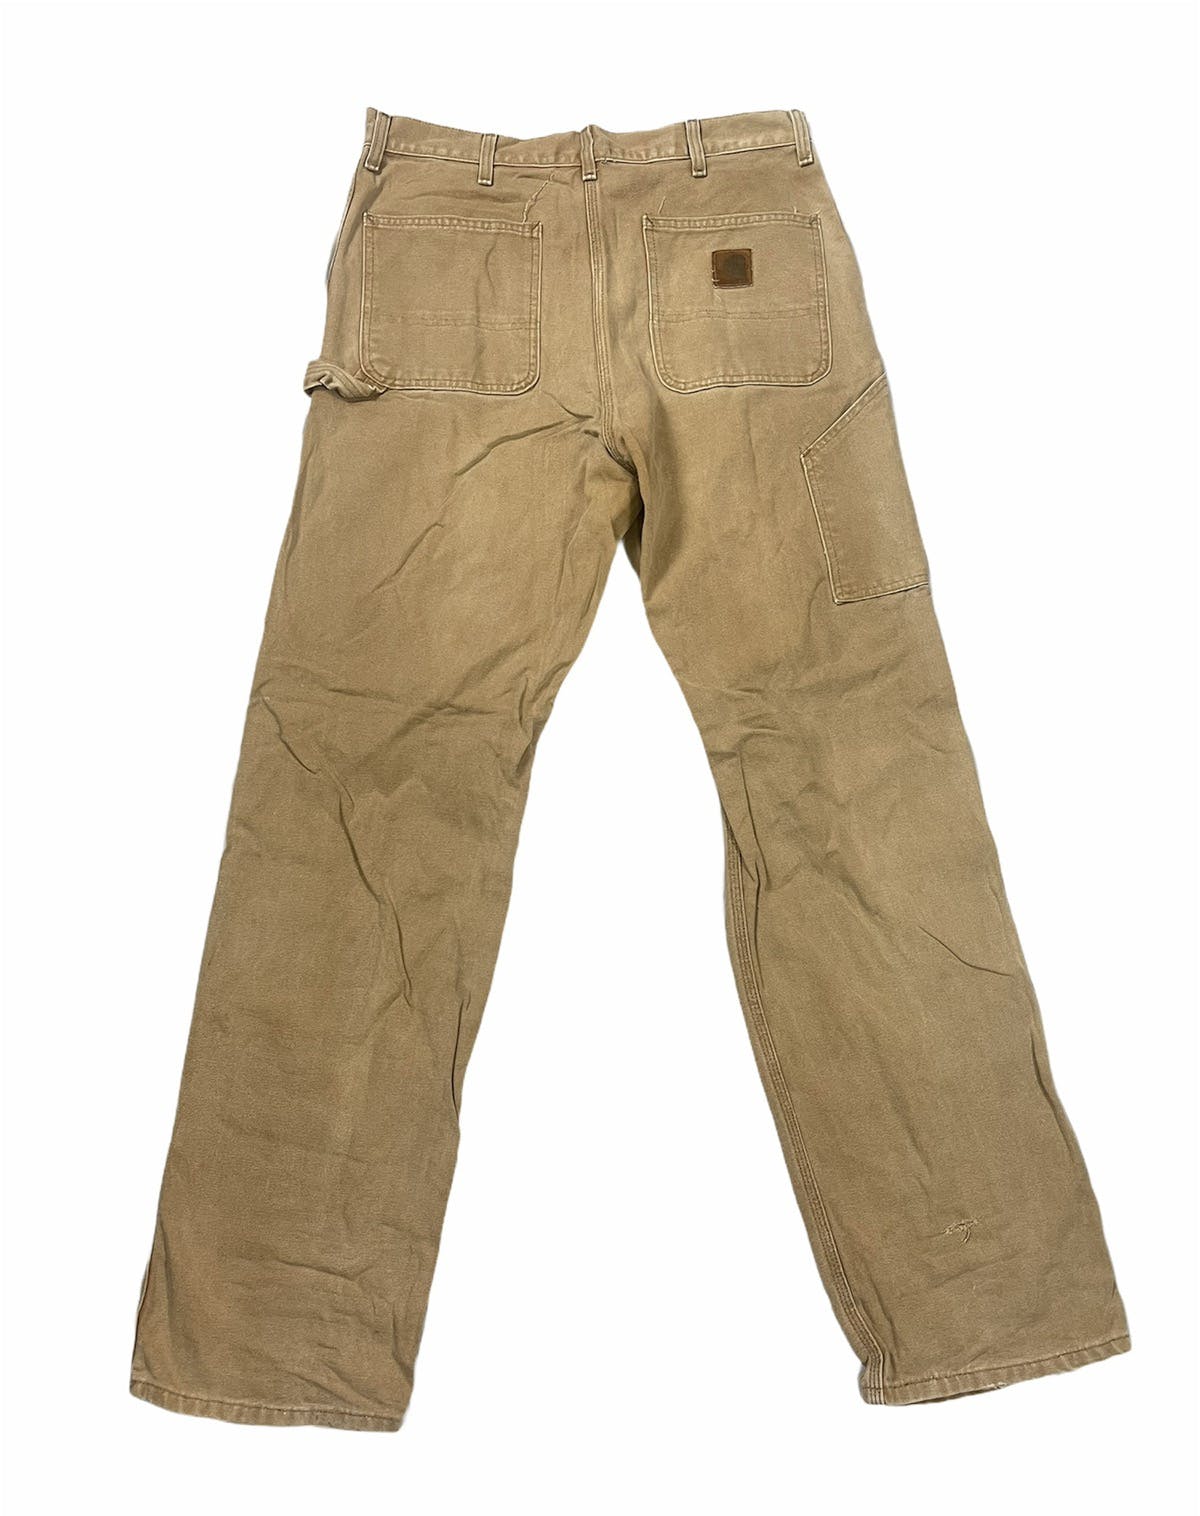 Carhatt Carpenter Cargo Pants - 2